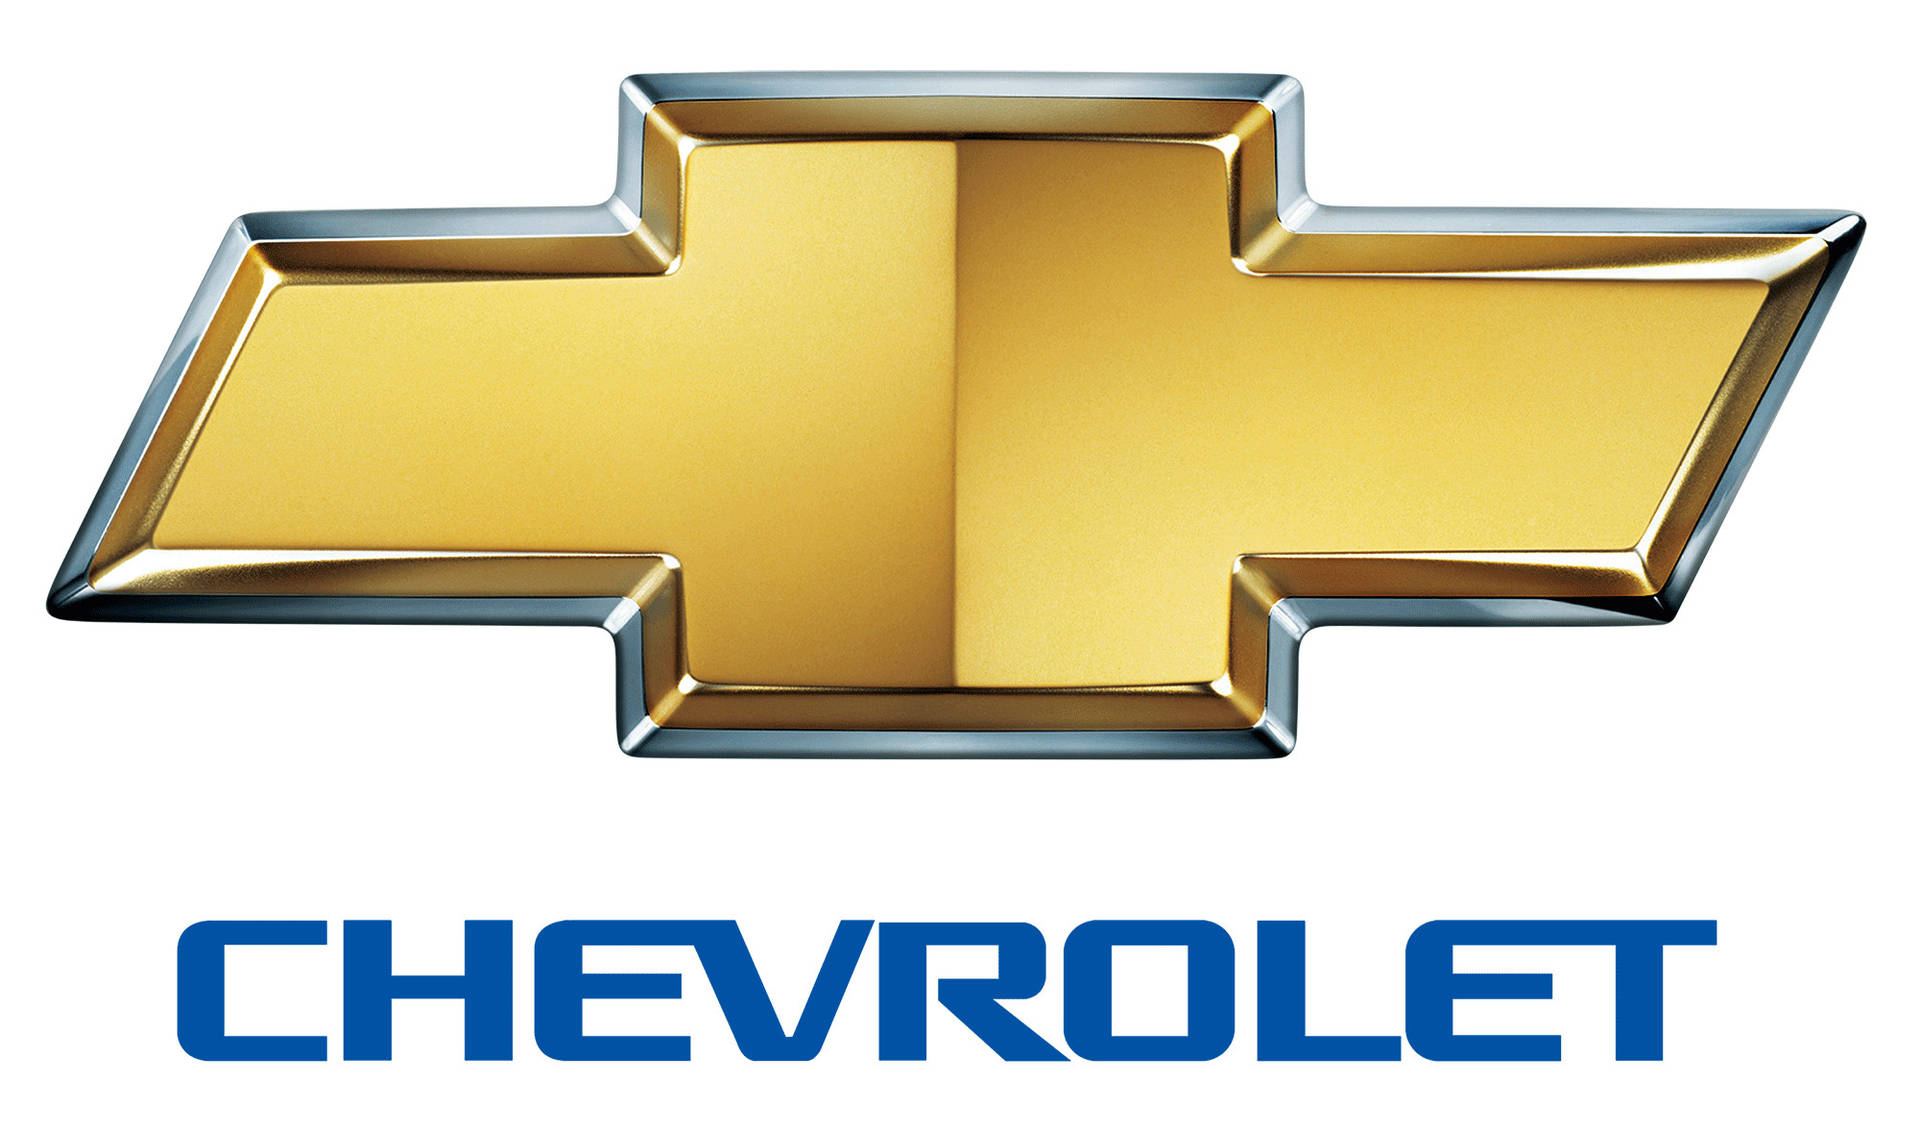 Old 2010 Chevrolet Logo Wallpaper